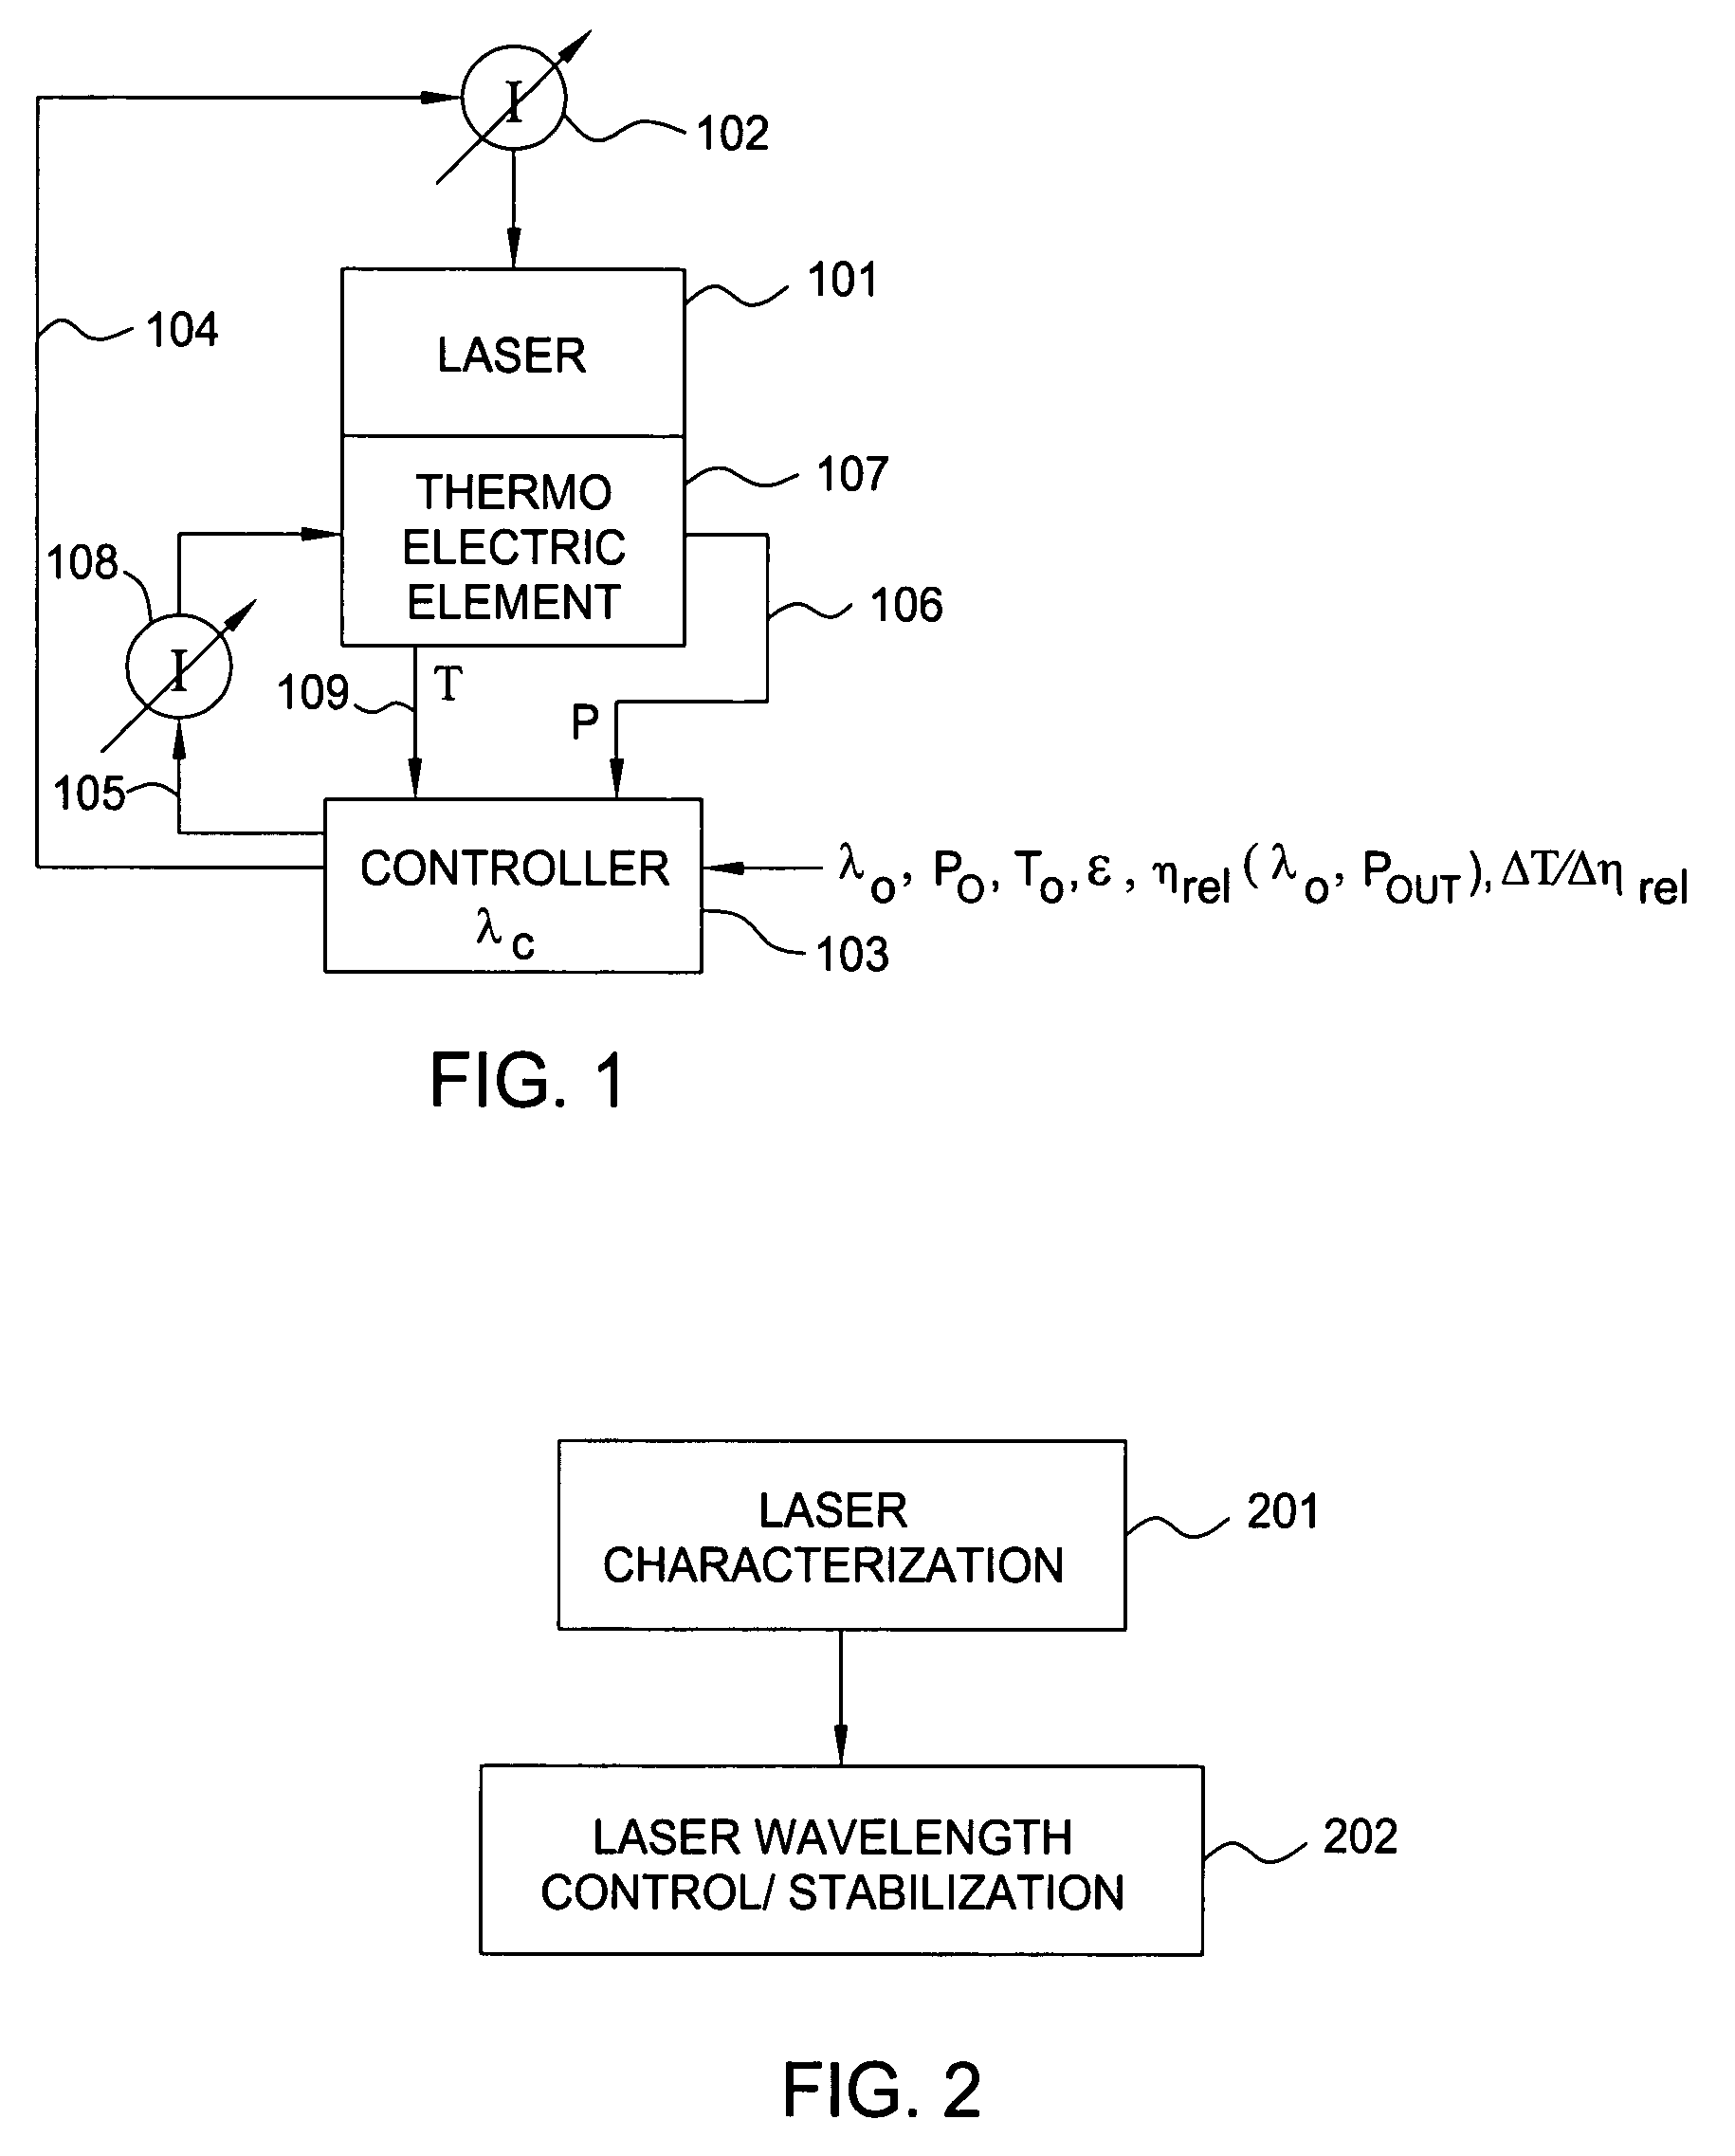 Laser wavelength control arrangement and method